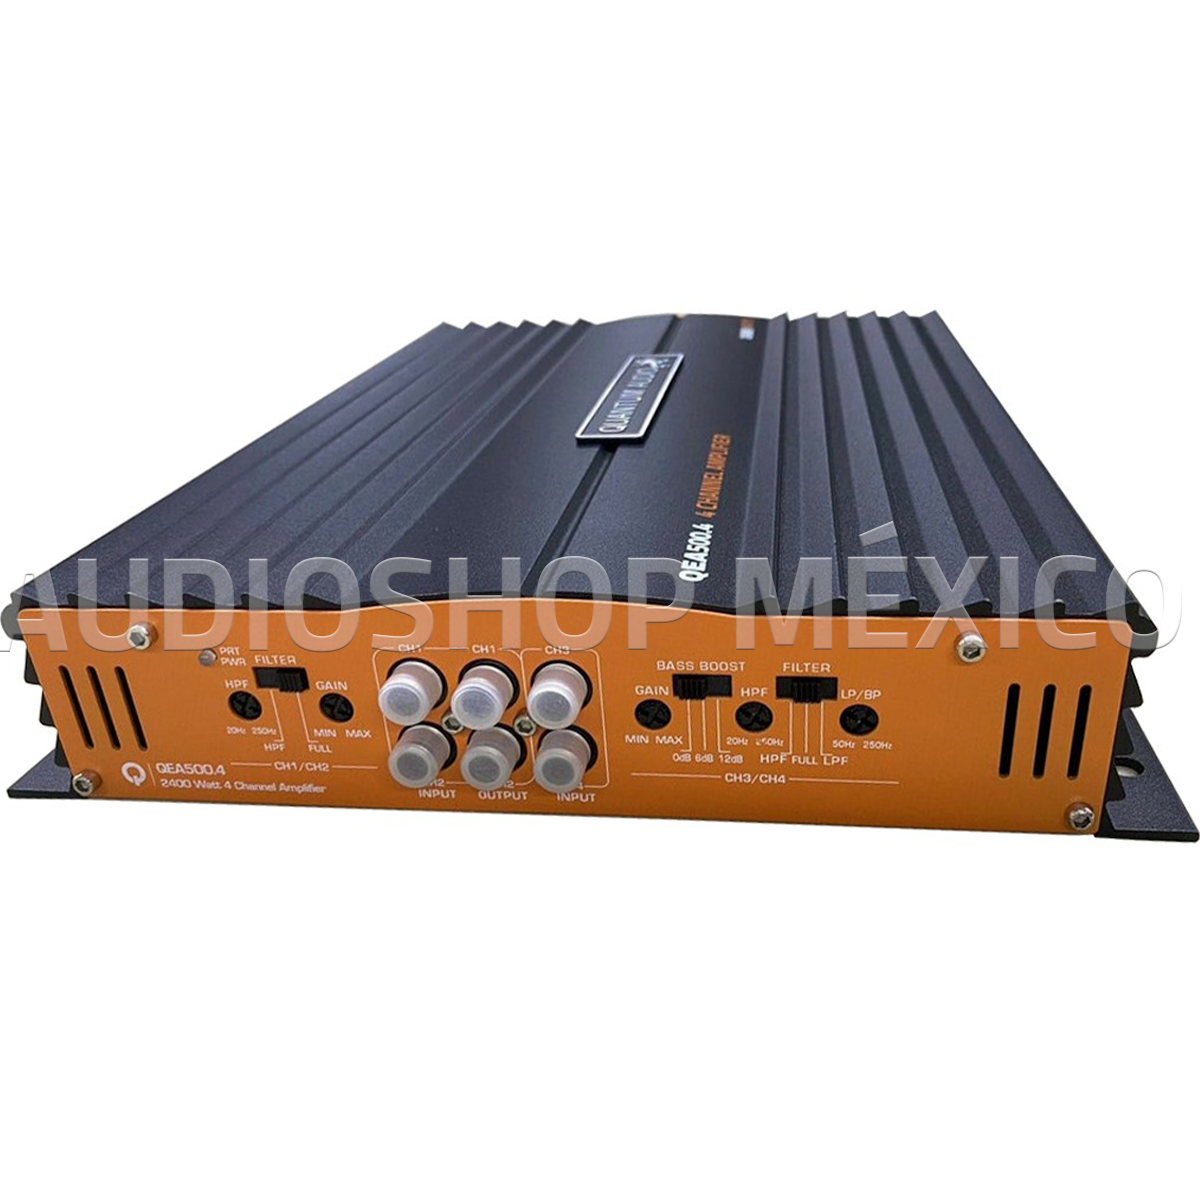 Amplificador Full Range 4 Canales Quantum QEA500.4 2400 Watts Clase AB 2 Ohms